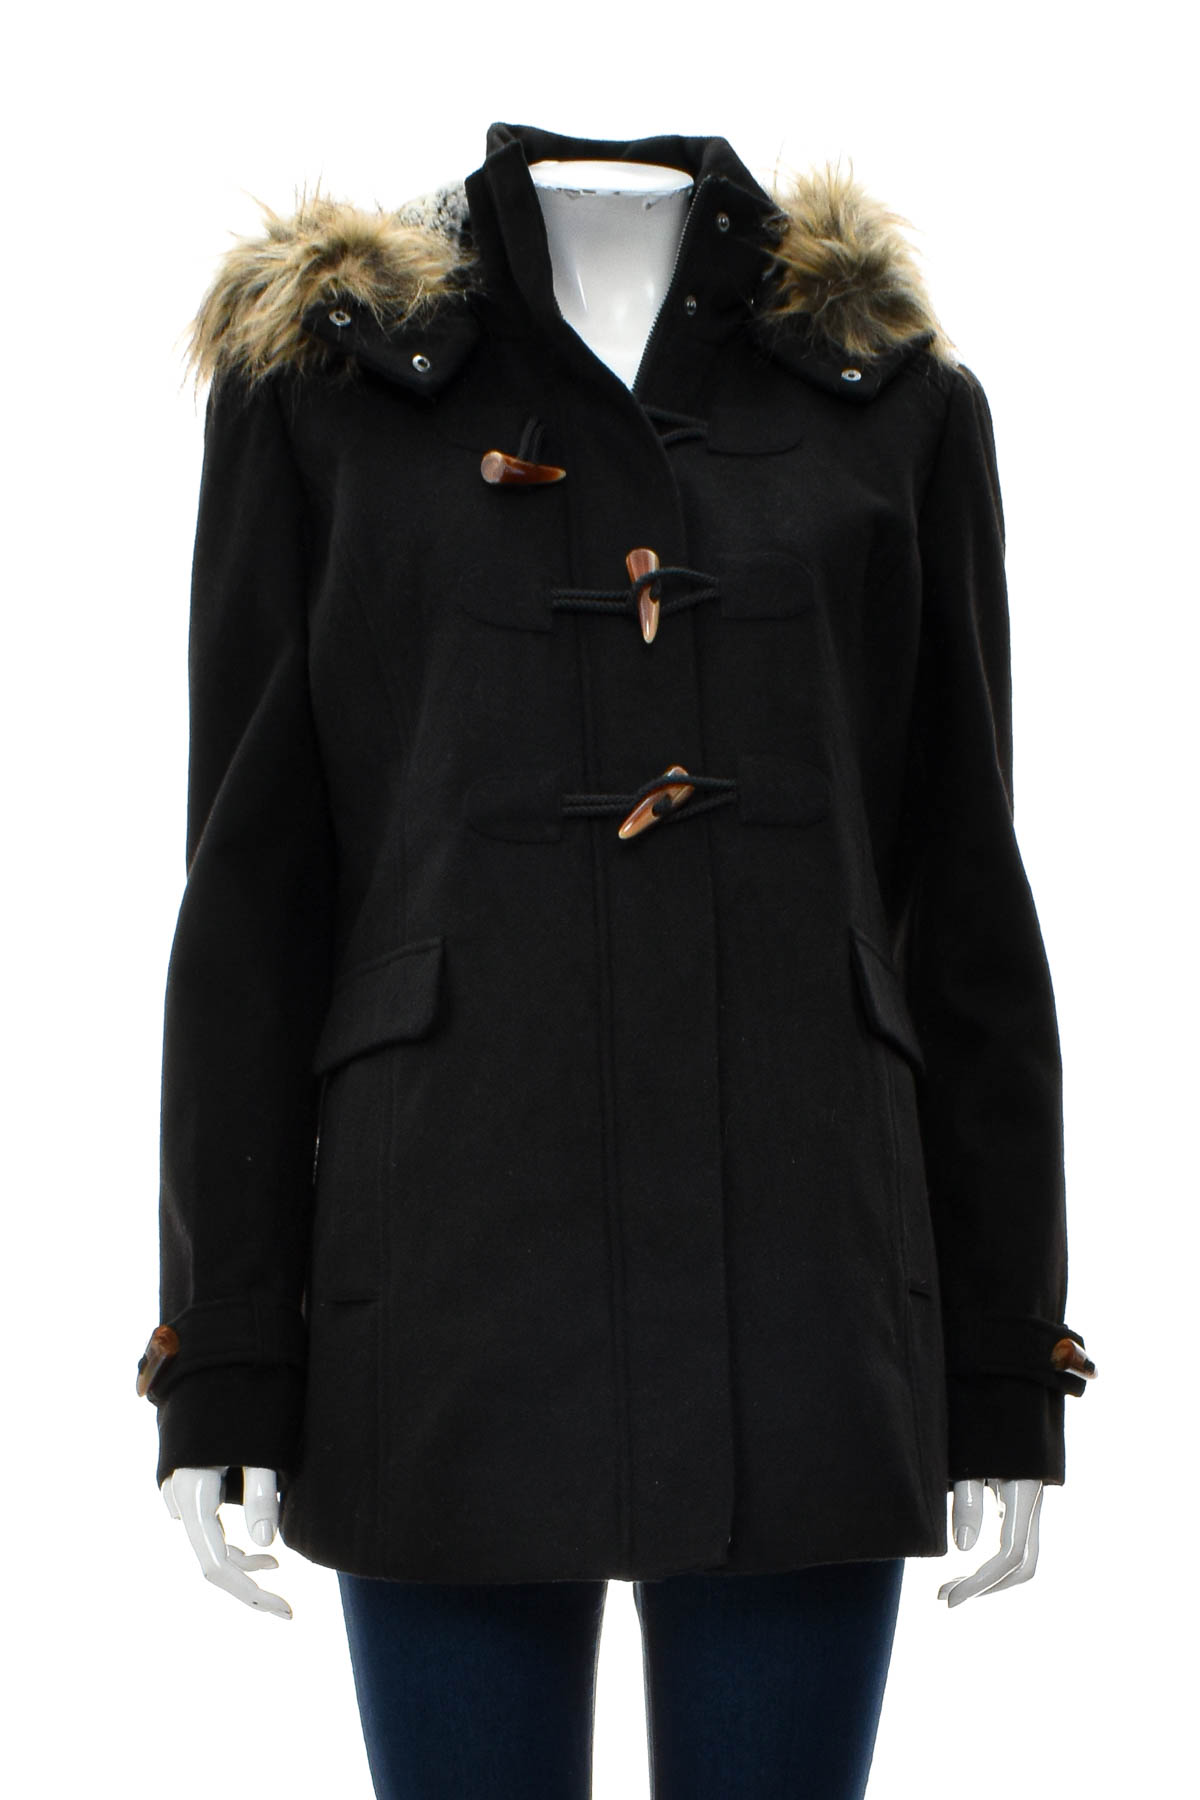 Women's coat - TOM TAILOR Denim - 0